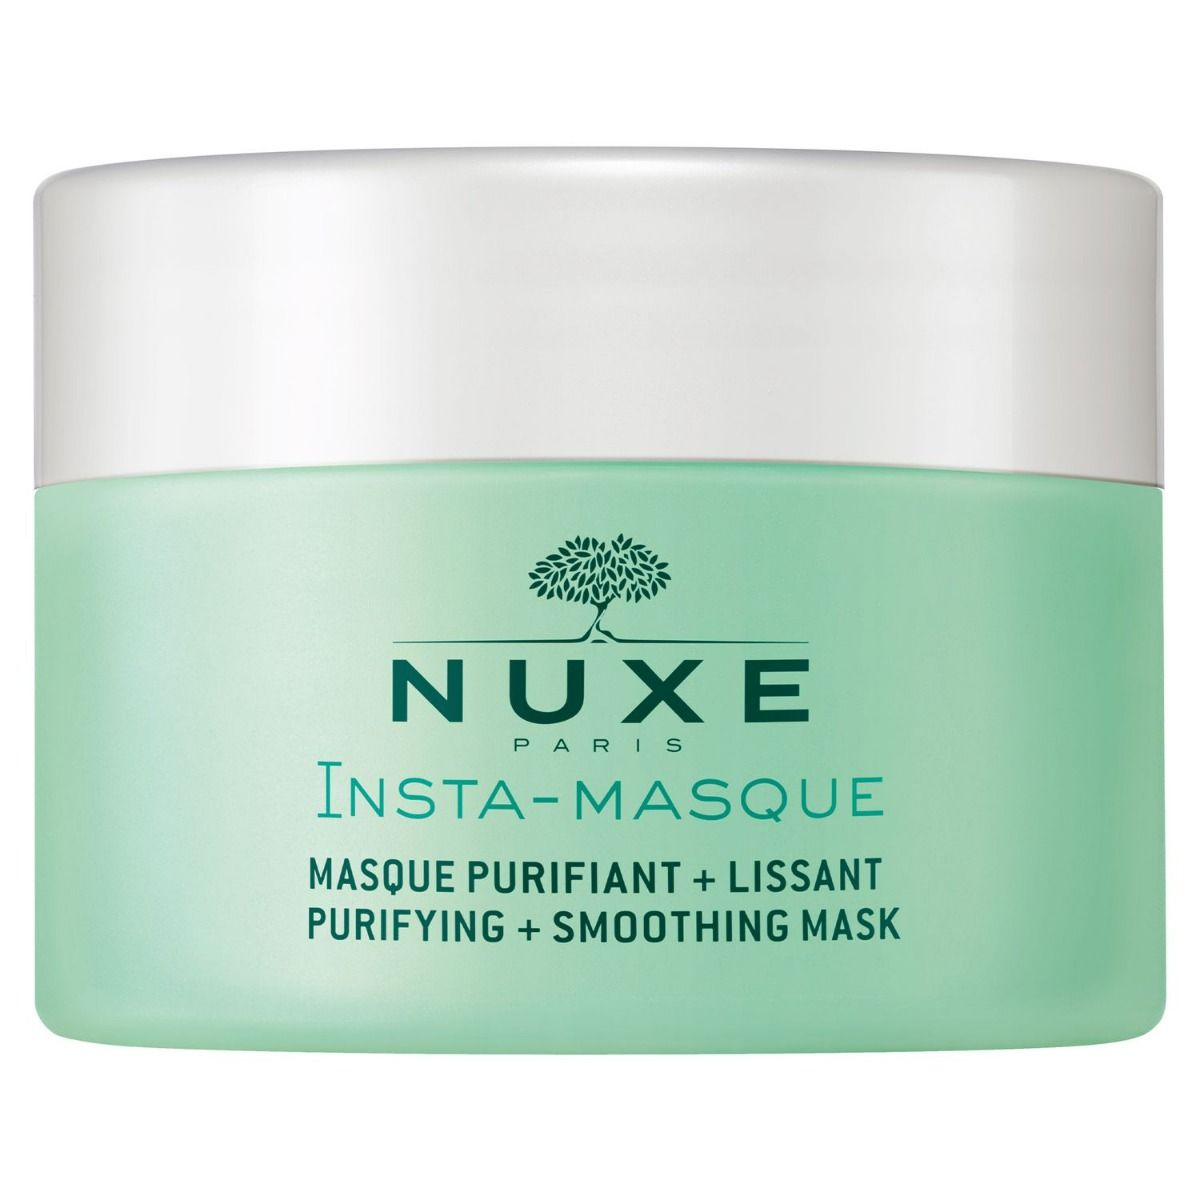 Nuxe Insta-Masque Purifiant + Lissant медицинская маска, 50 ml nuxe маска insta masque очищающая разглаживающая для лица 50 мл